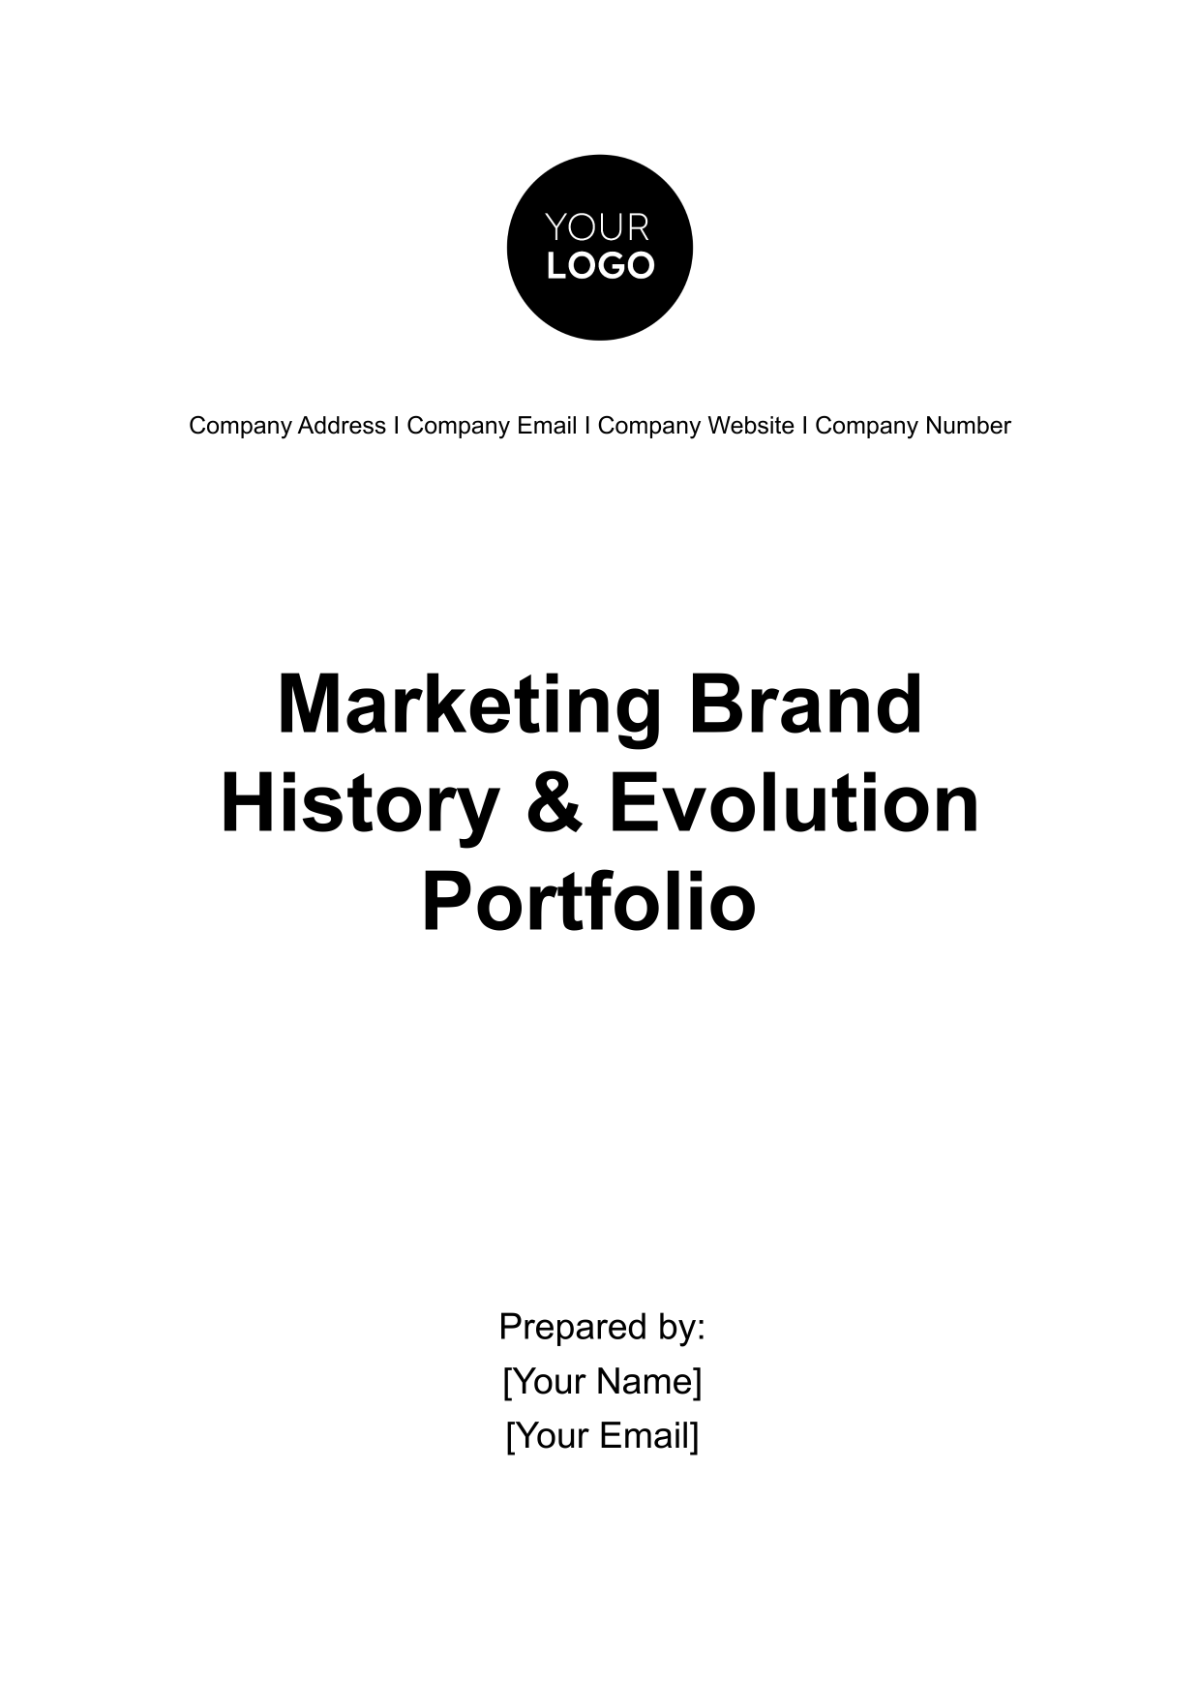 Free Marketing Brand History & Evolution Portfolio Template